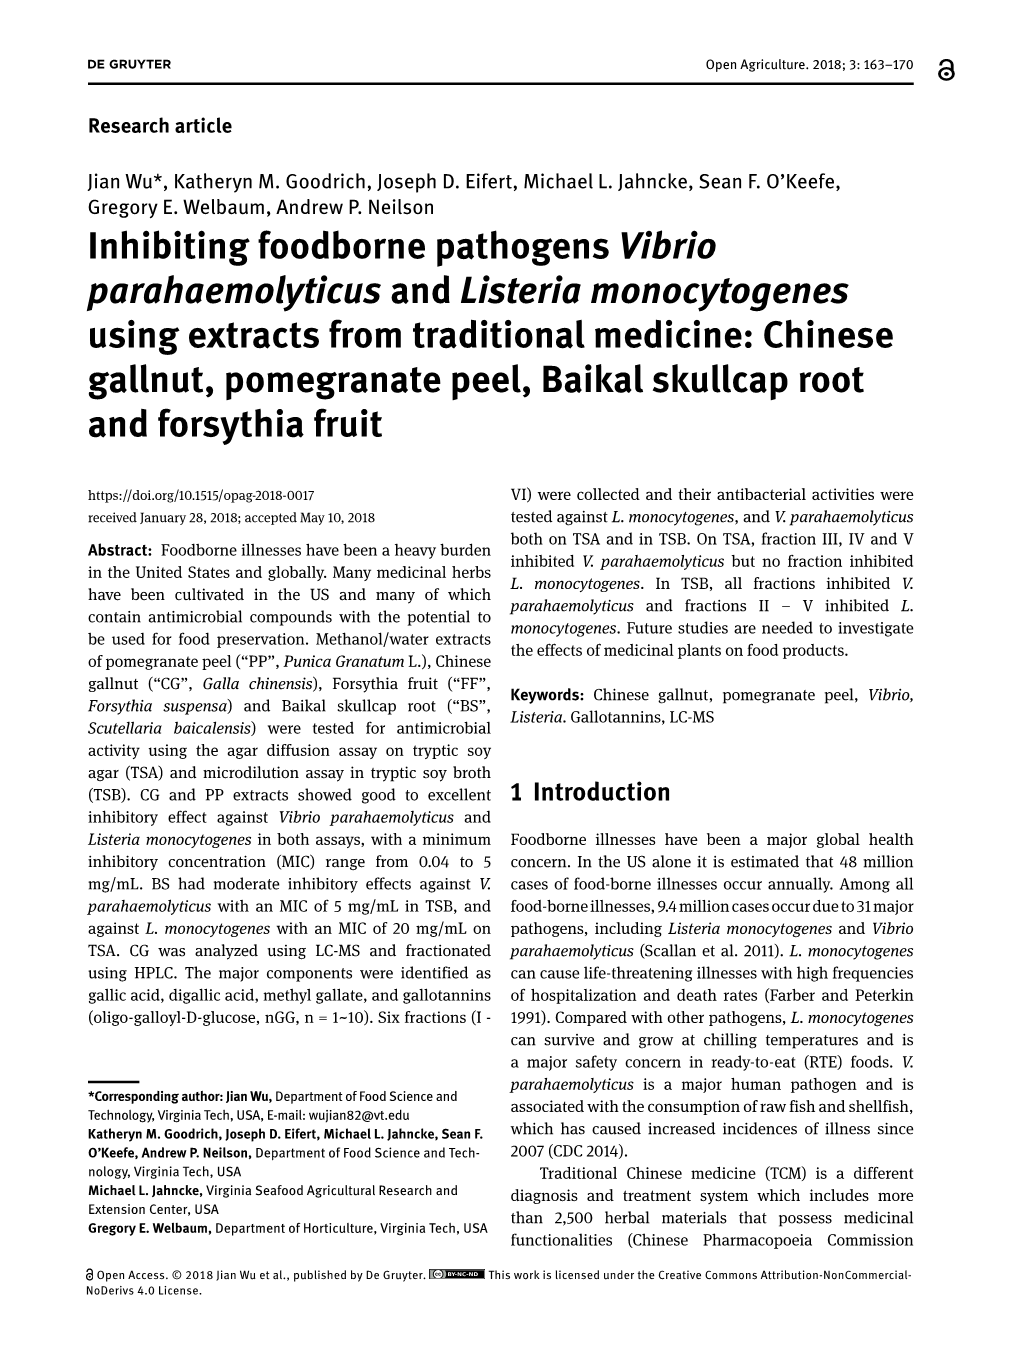 Inhibiting Foodborne Pathogens Vibrio Parahaemolyticus and Listeria